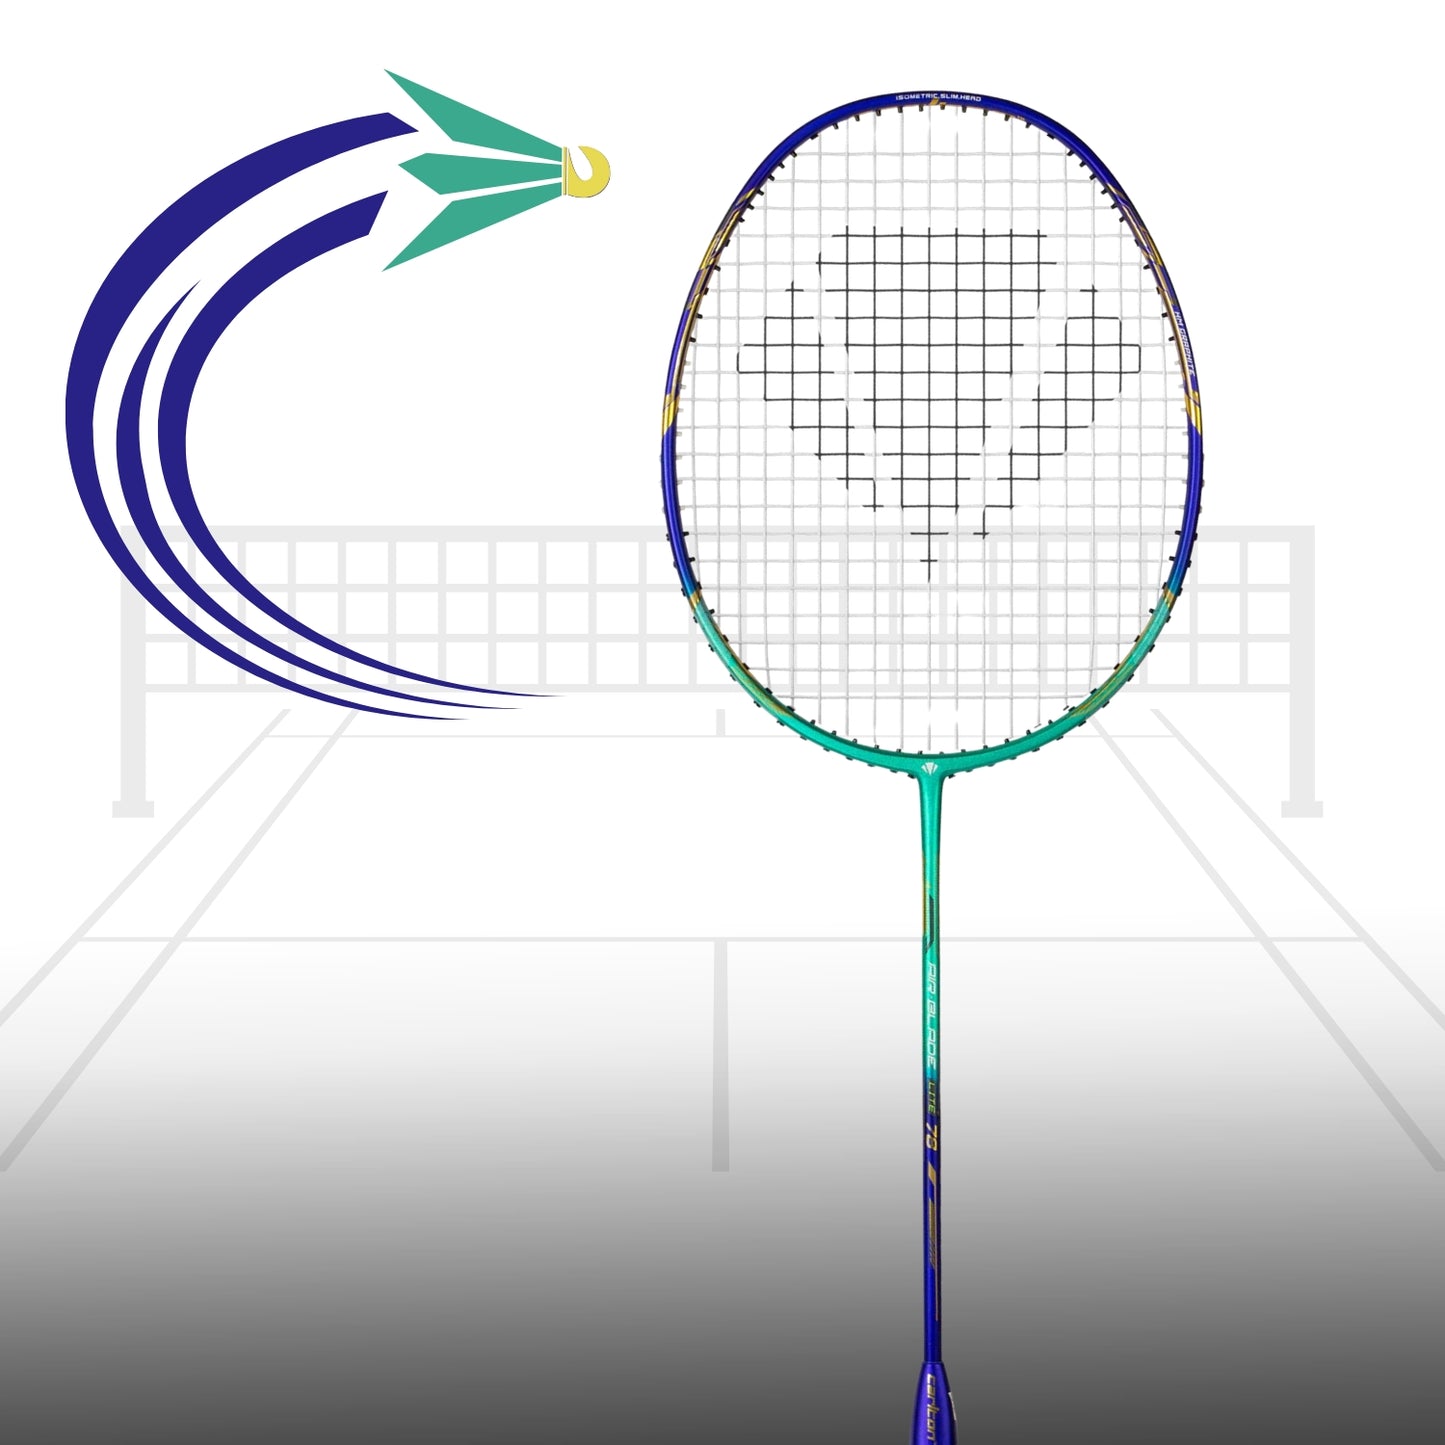 Carlton Air Blade Lite 78 Unstrung Badminton Racquet, G6 - Best Price online Prokicksports.com